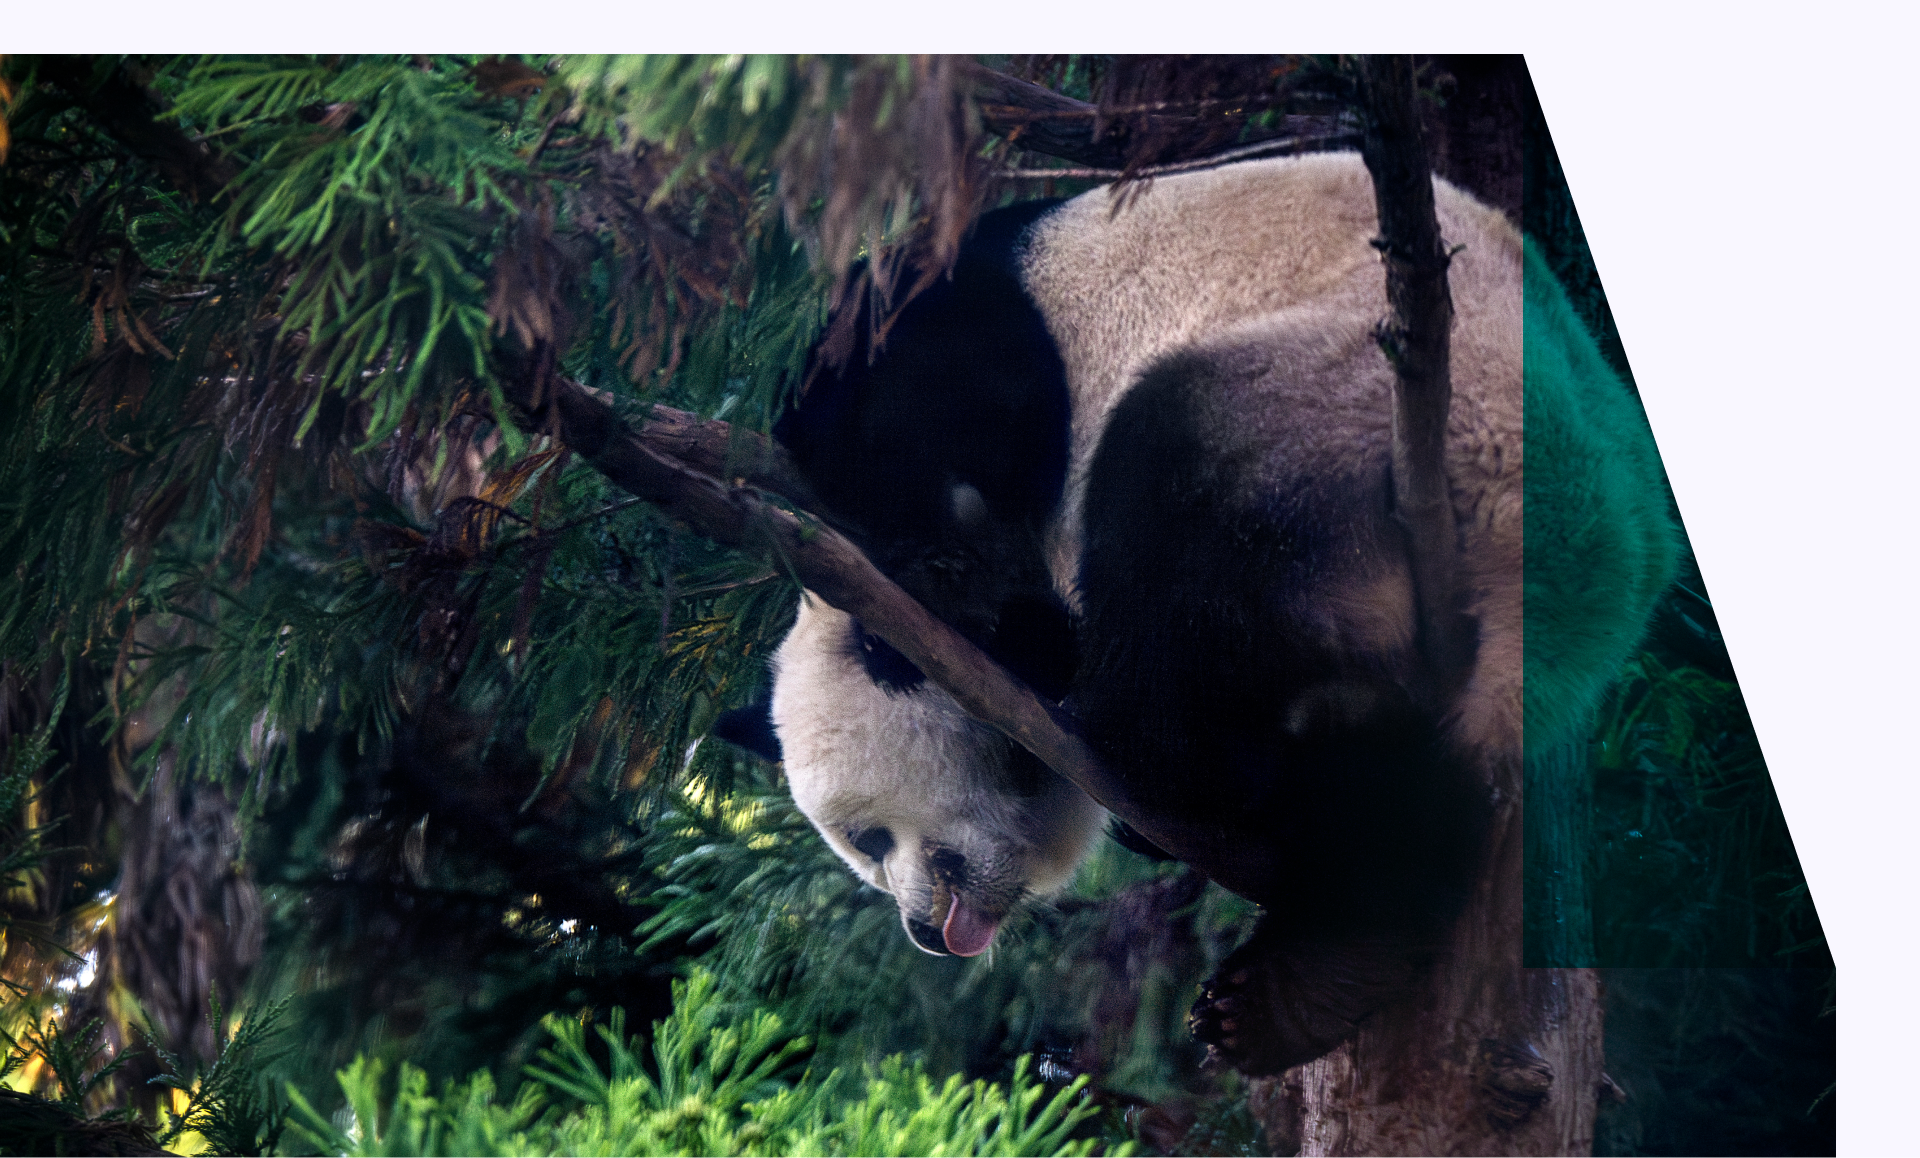 A giant panda in a tree